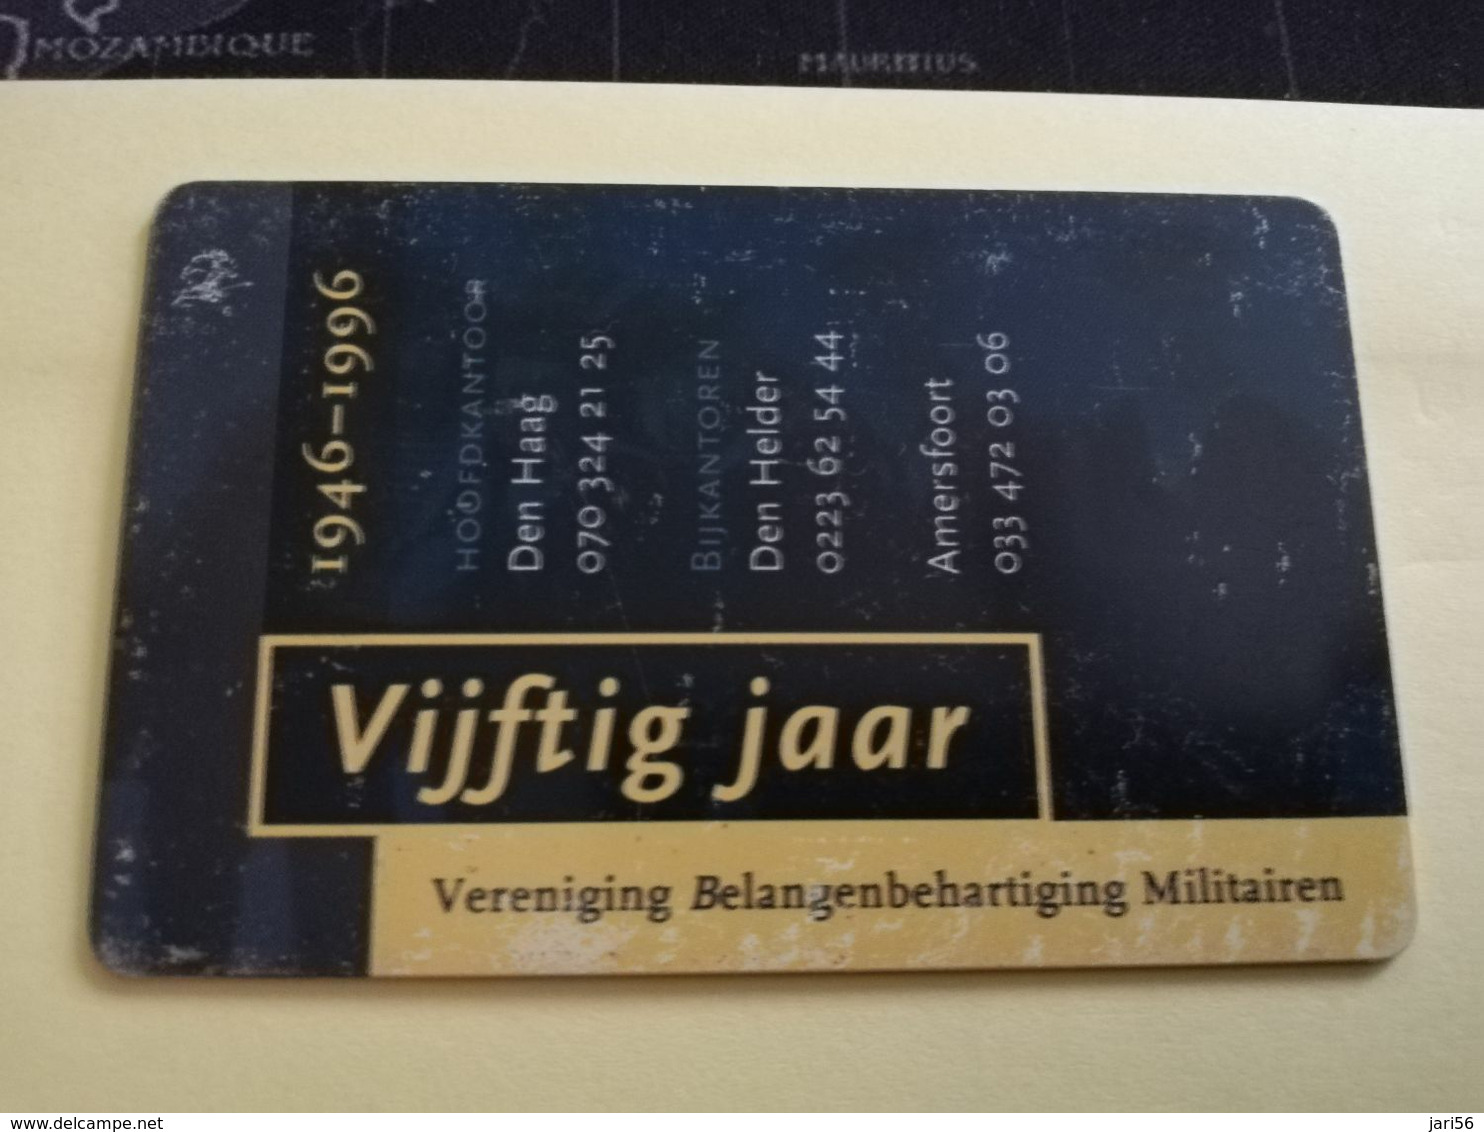 NETHERLANDS  ADVERTISING CHIPCARD HFL 2,50   CRD 275  VIJFTIG JAAR VBM VAKBOND MILITAIREN          Fine Used   ** 3209** - Private